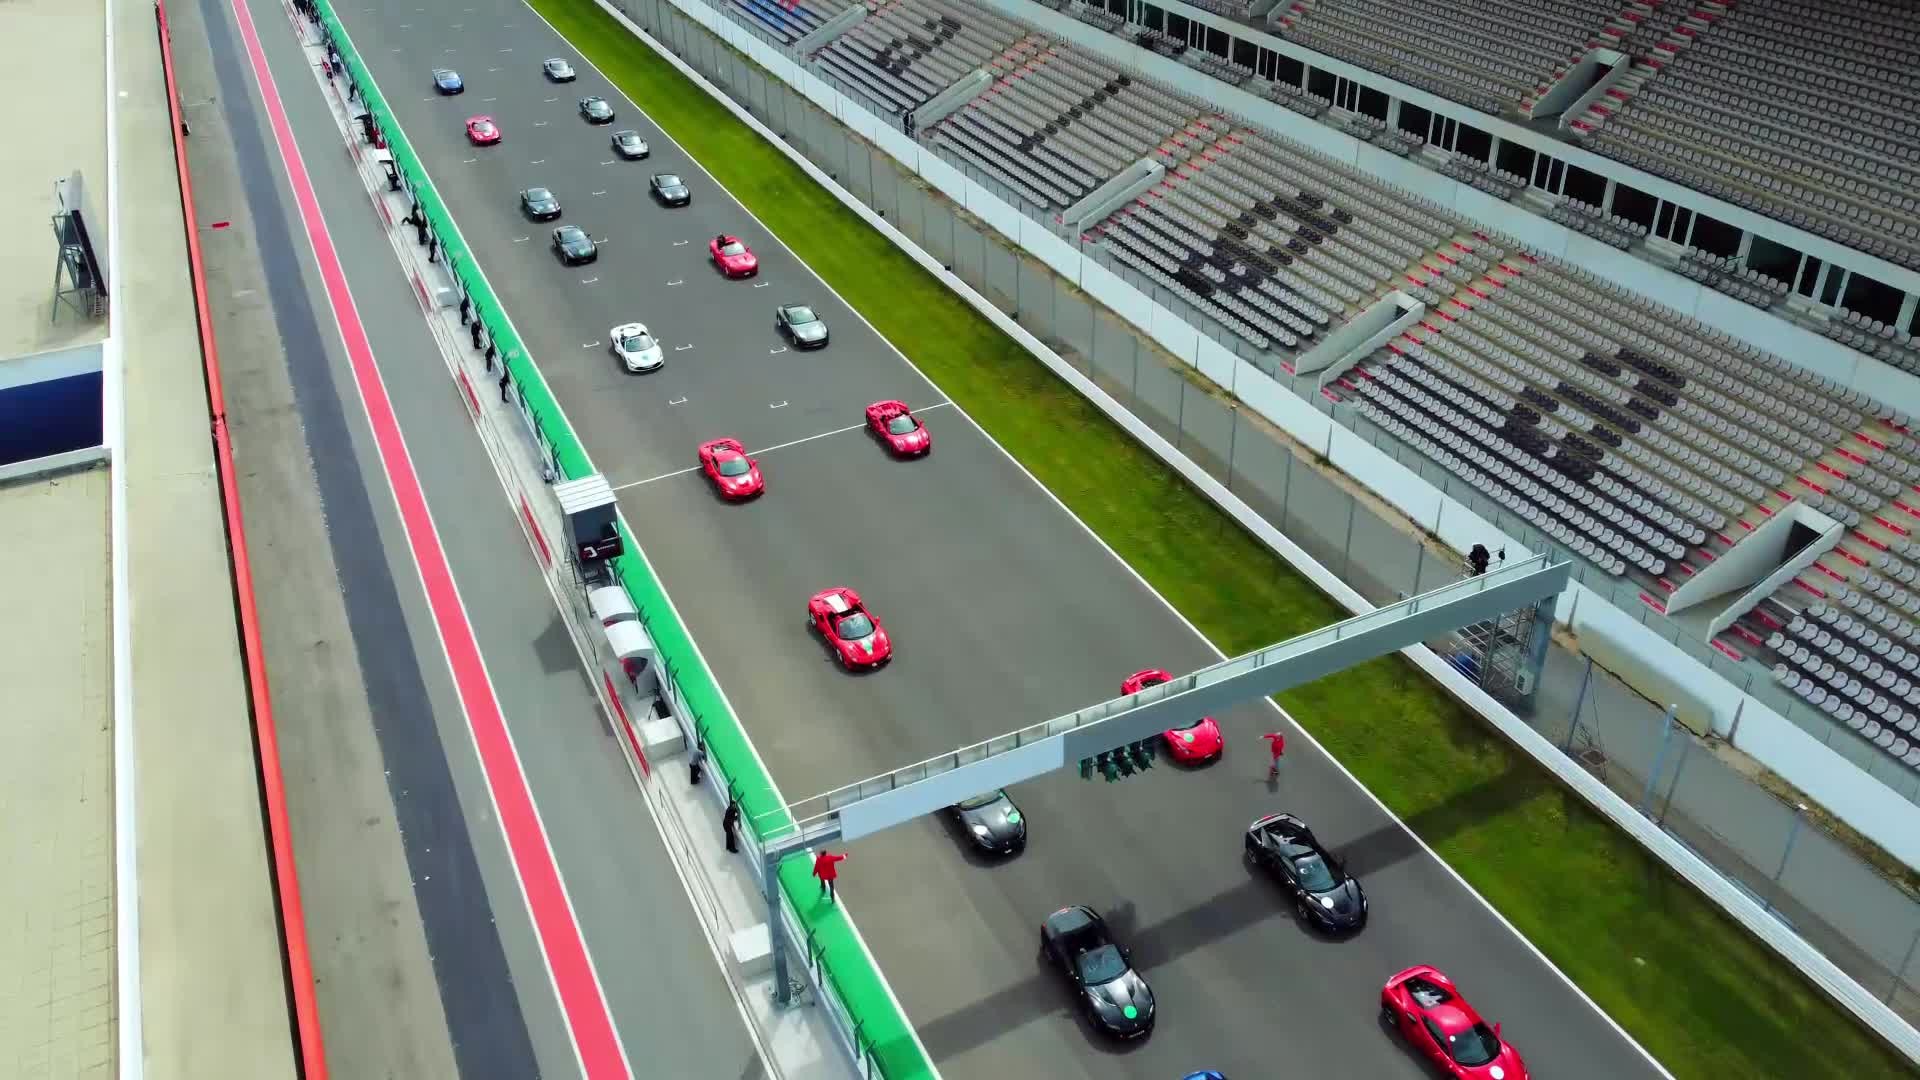 Passione Ferrari: new season kicks off at Portimão circuit